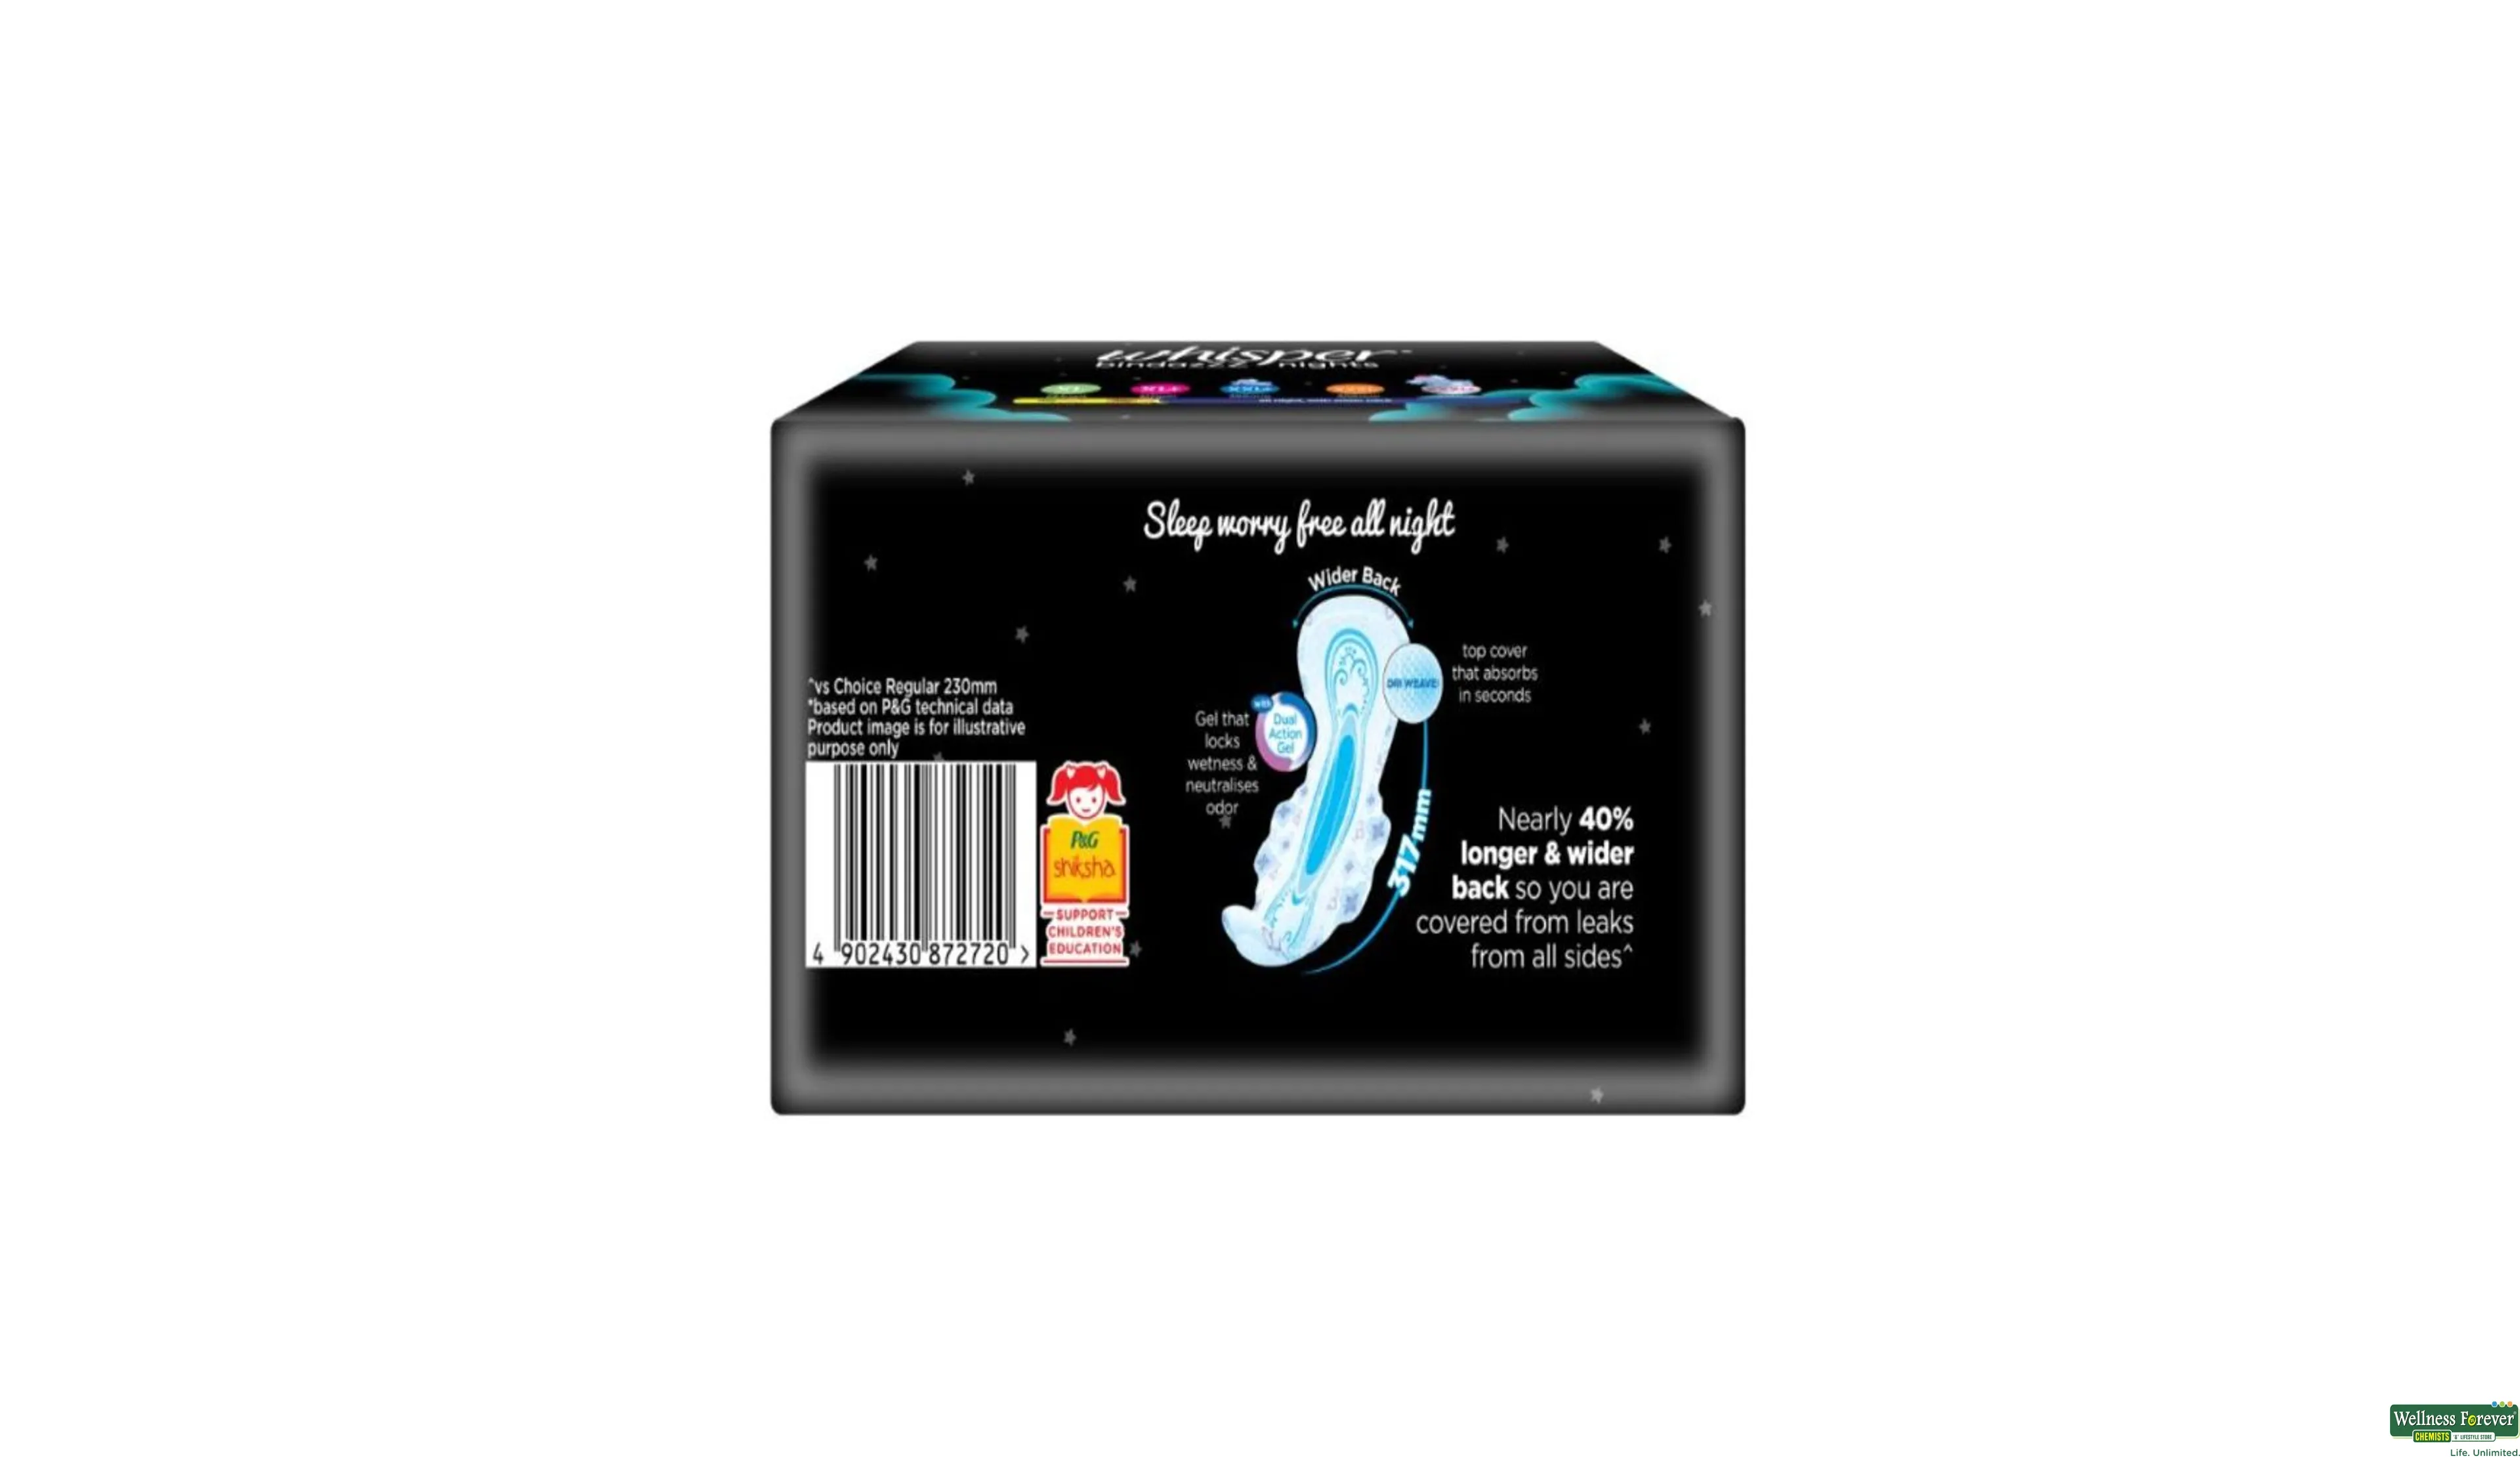 Whisper Bindazzz Nights Koala Soft Sanitary Pads, XXL+ 10 Napkins/ Free  Shipping